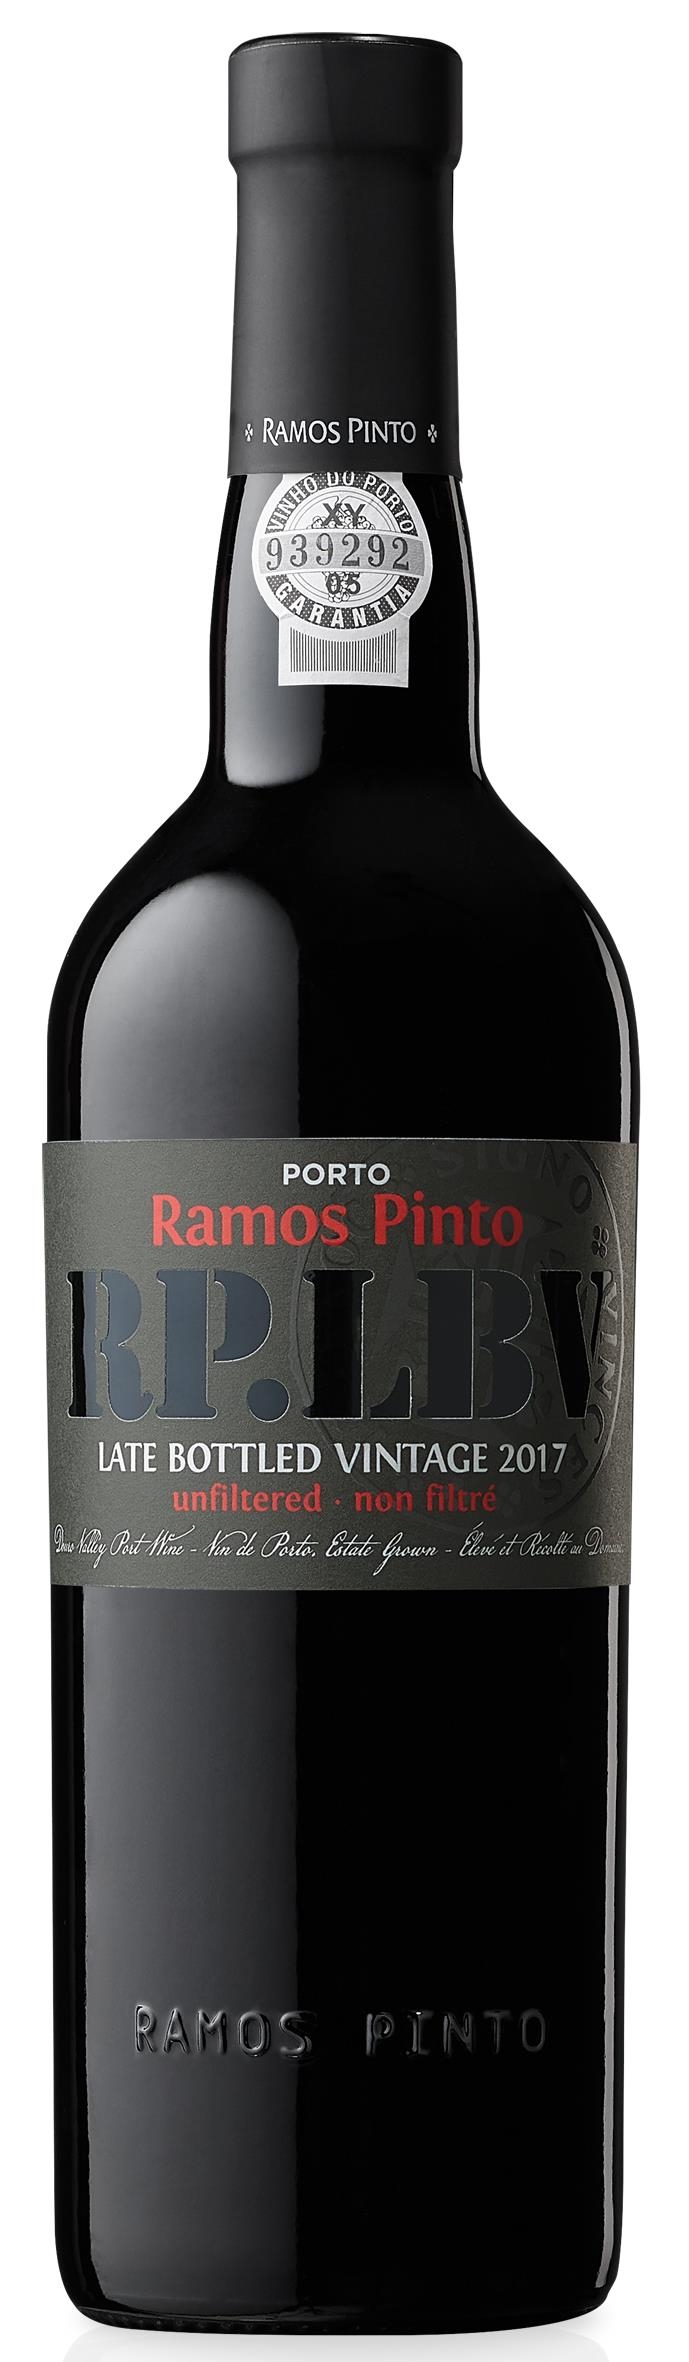 Ramos Pinto Porto LBV 2017